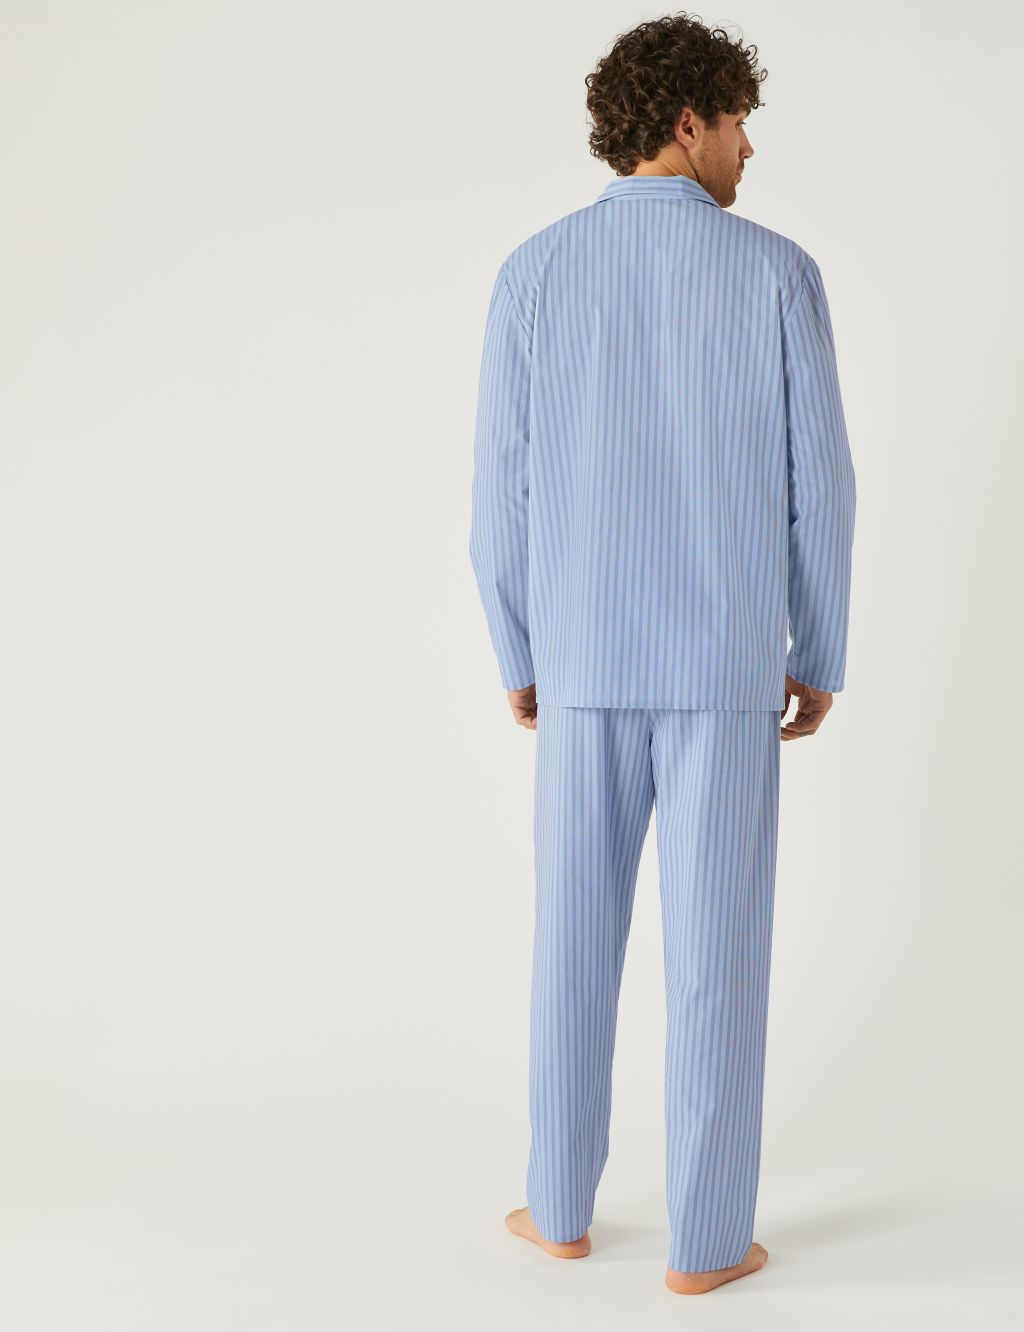 Cotton Blend Bengal Stripe Pyjama Set image 4